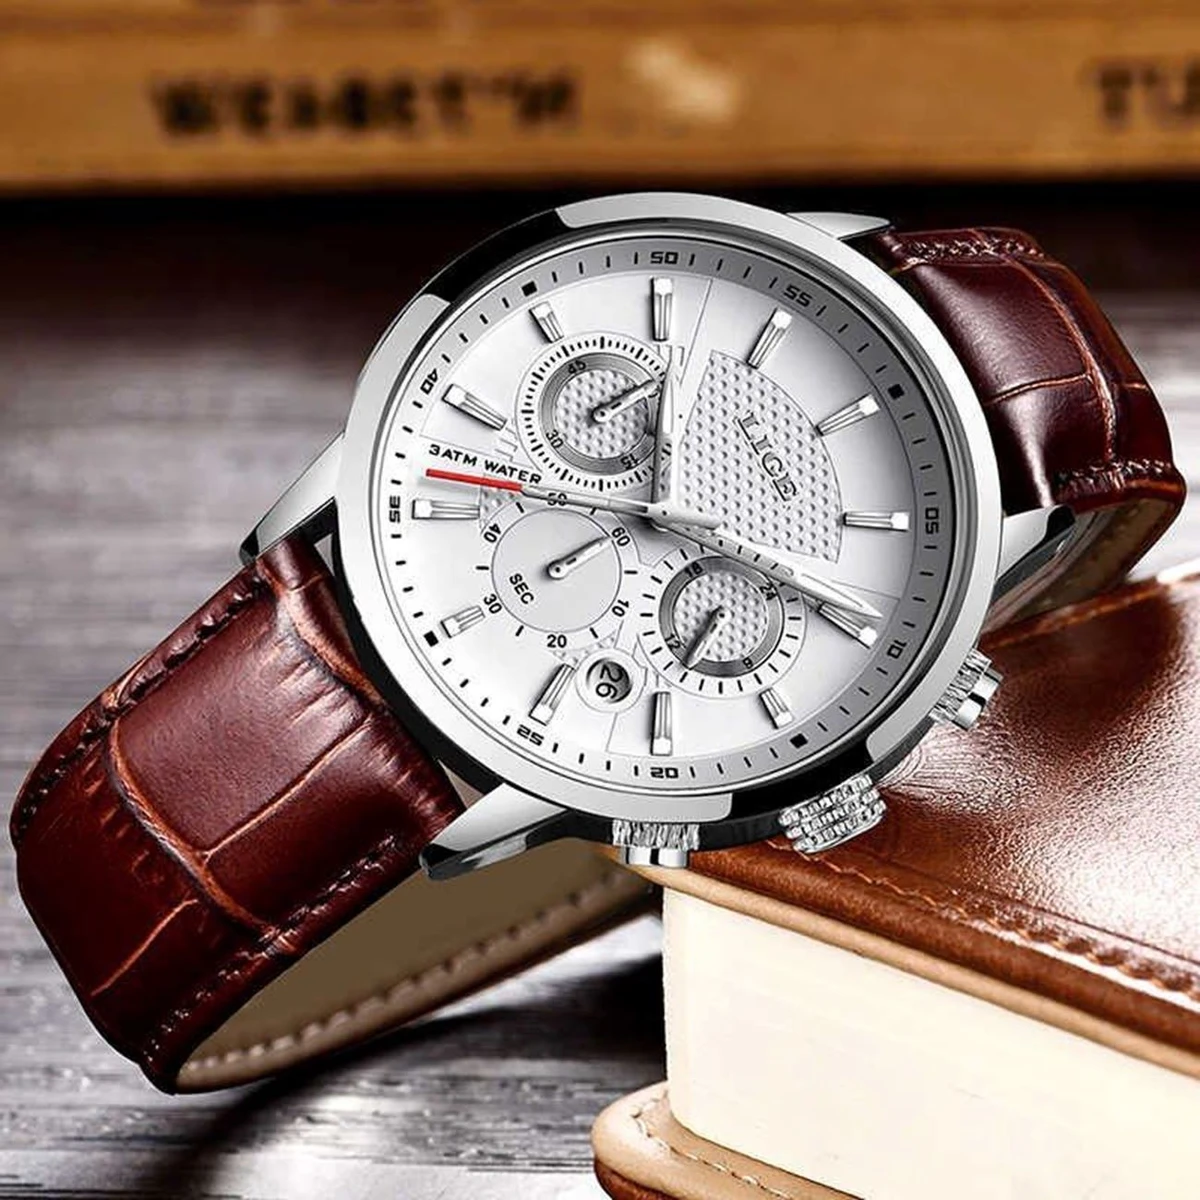 LIGE 9866 Men Fashion Sport Quartz Luxury Leather Waterproof Chronograph Watch